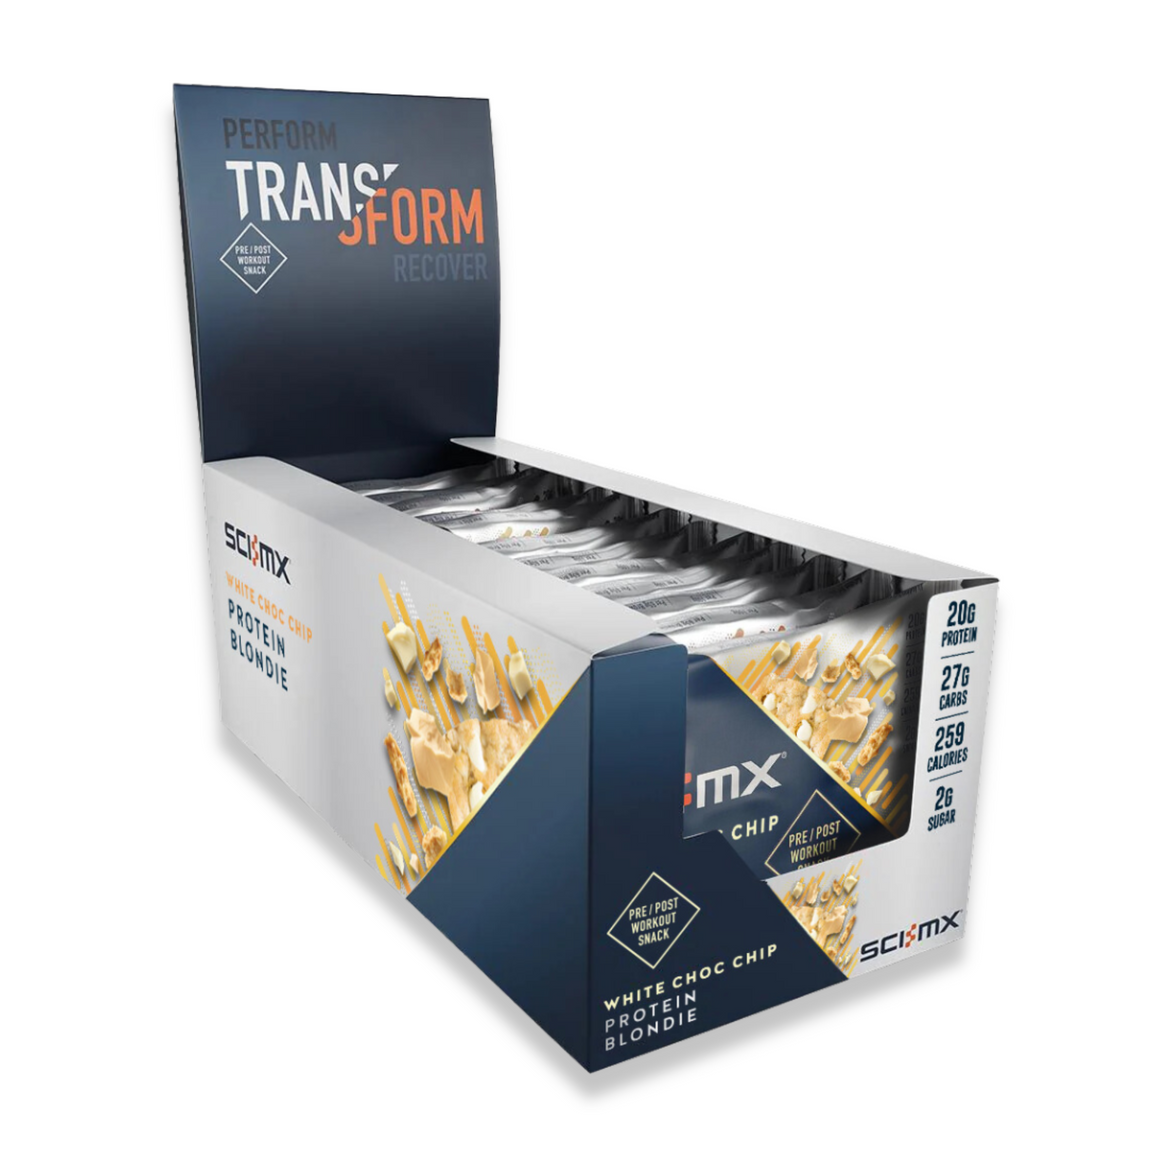 Sci-Mx - Protein Blondie - Chocolate Chip - 65g (Price per box of 12)